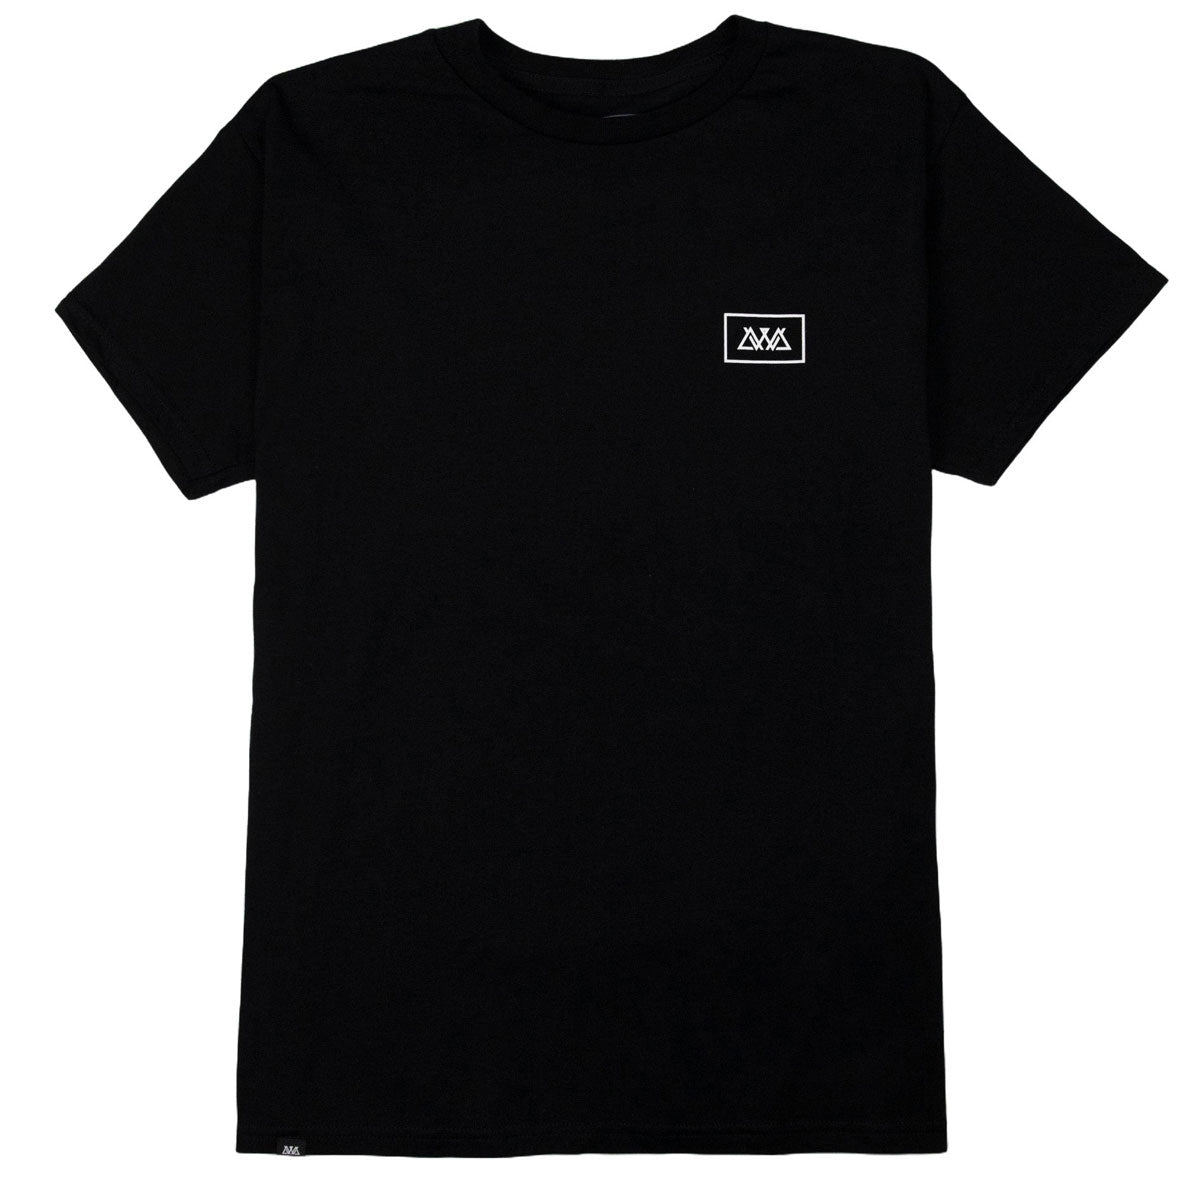 AVVA Skull Beach T-Shirt - Black image 2